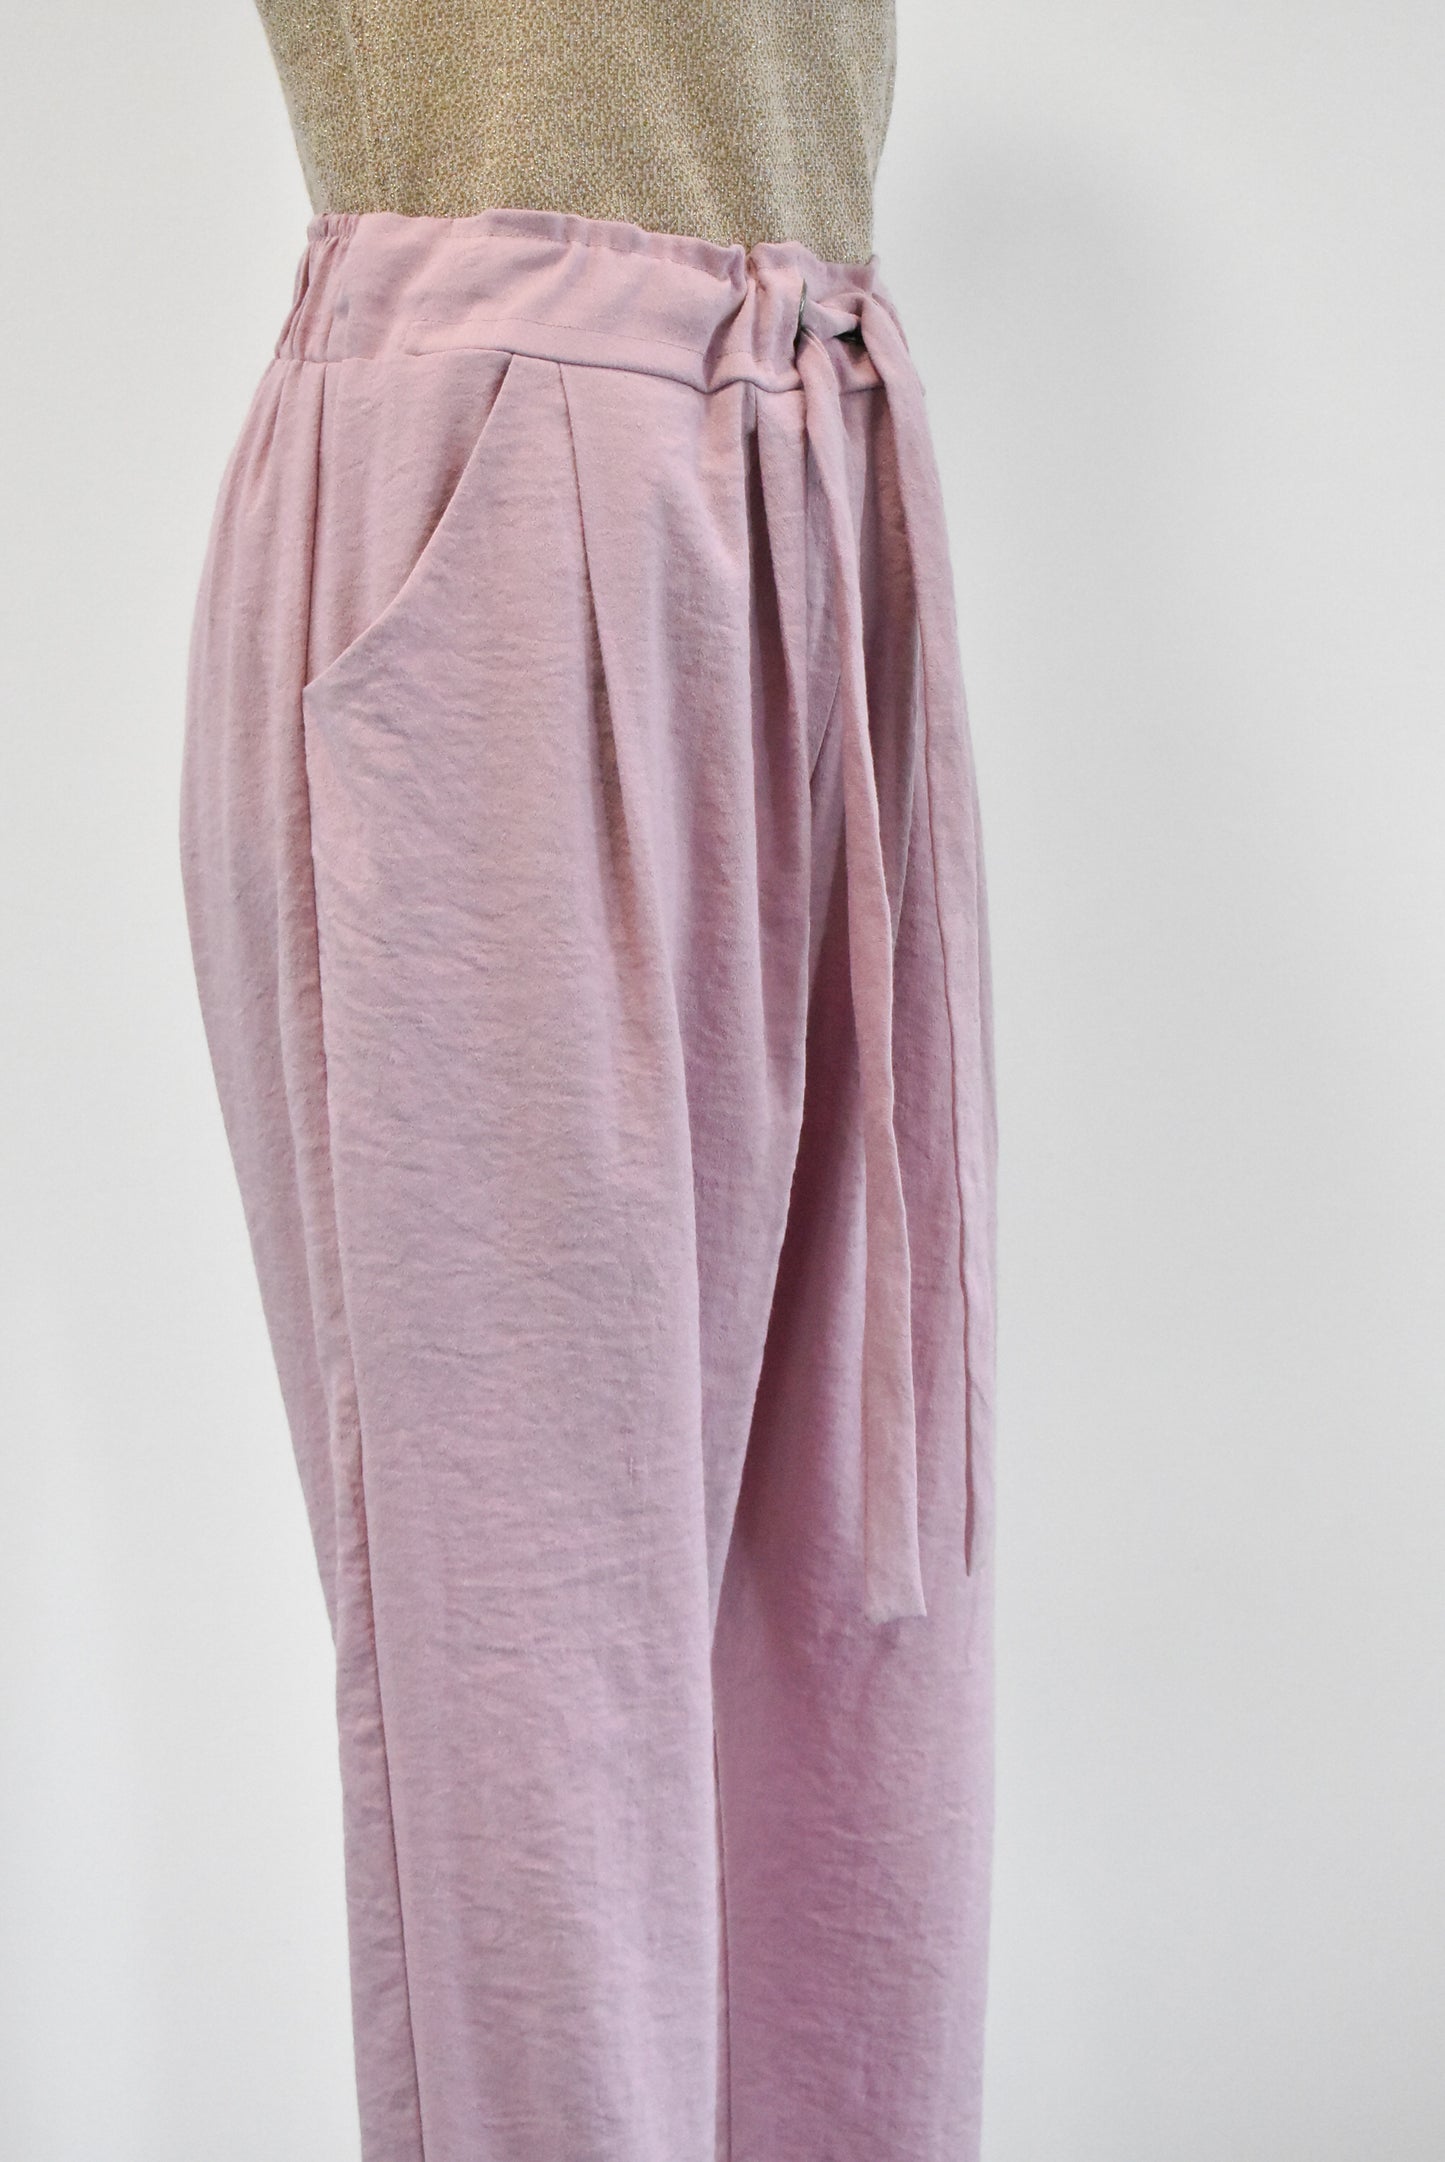 KILT pink jogger pants, 8